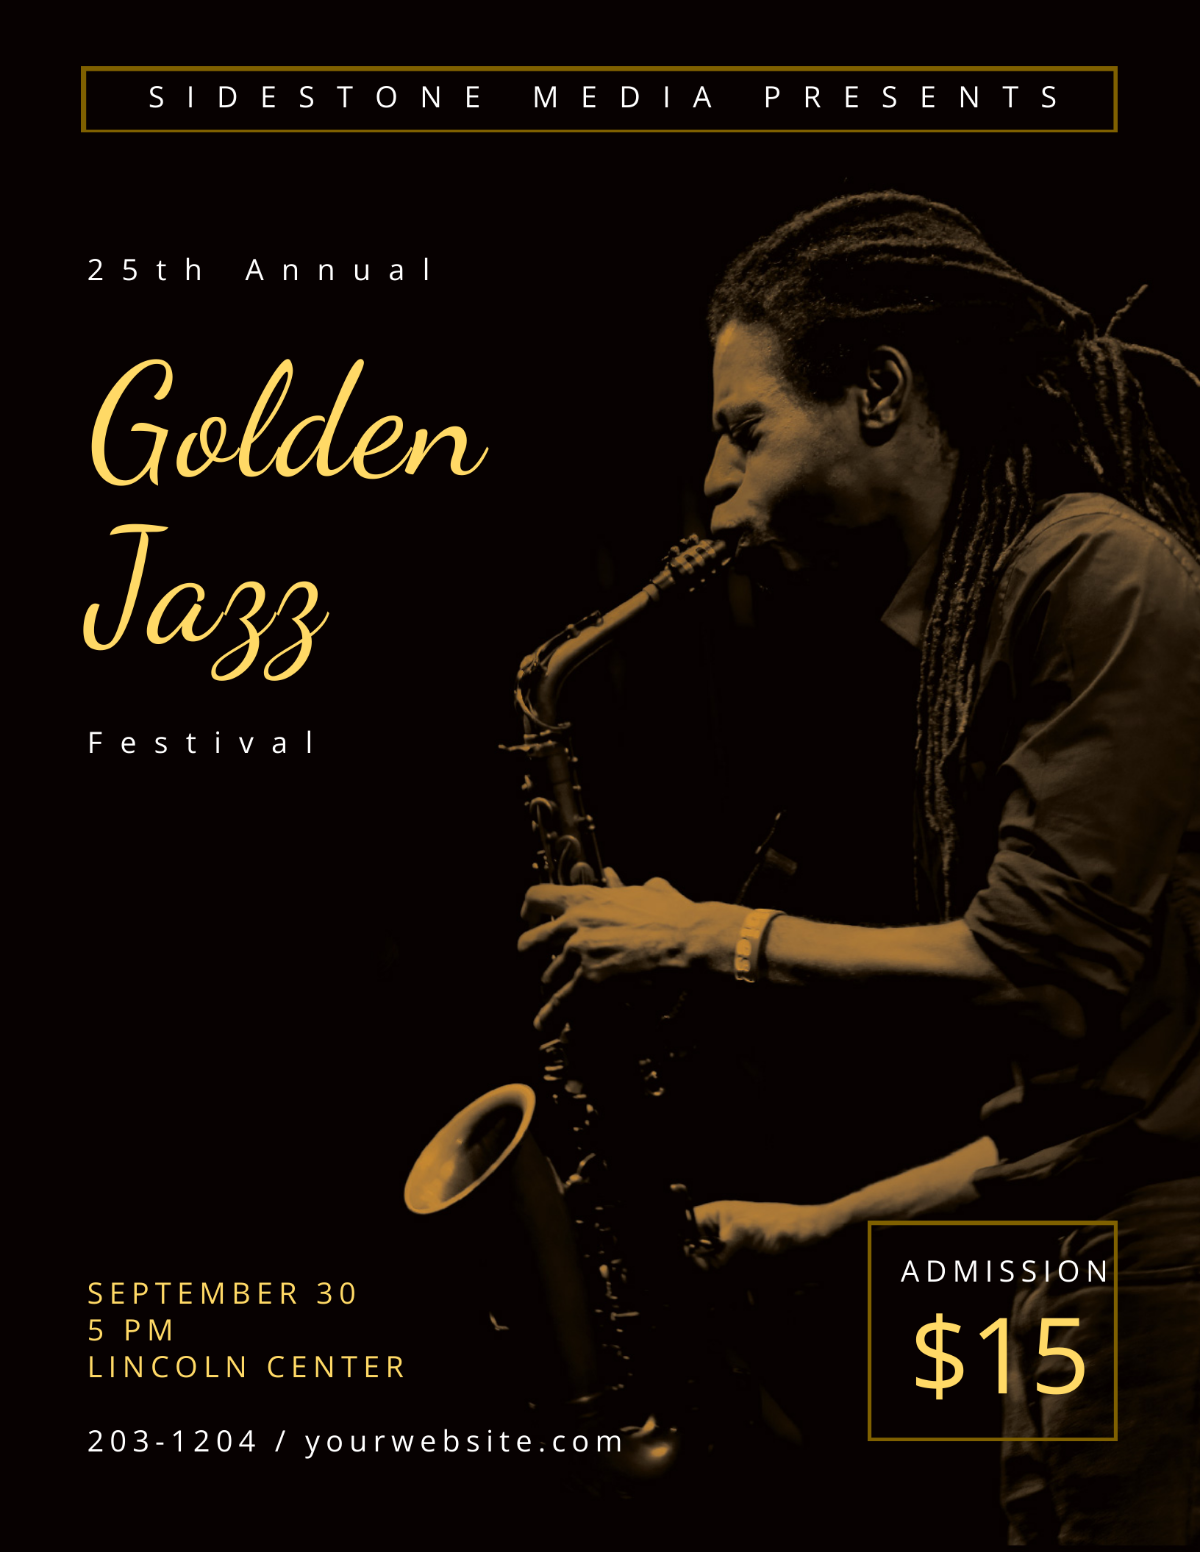 Golden Jazz Flyer Template